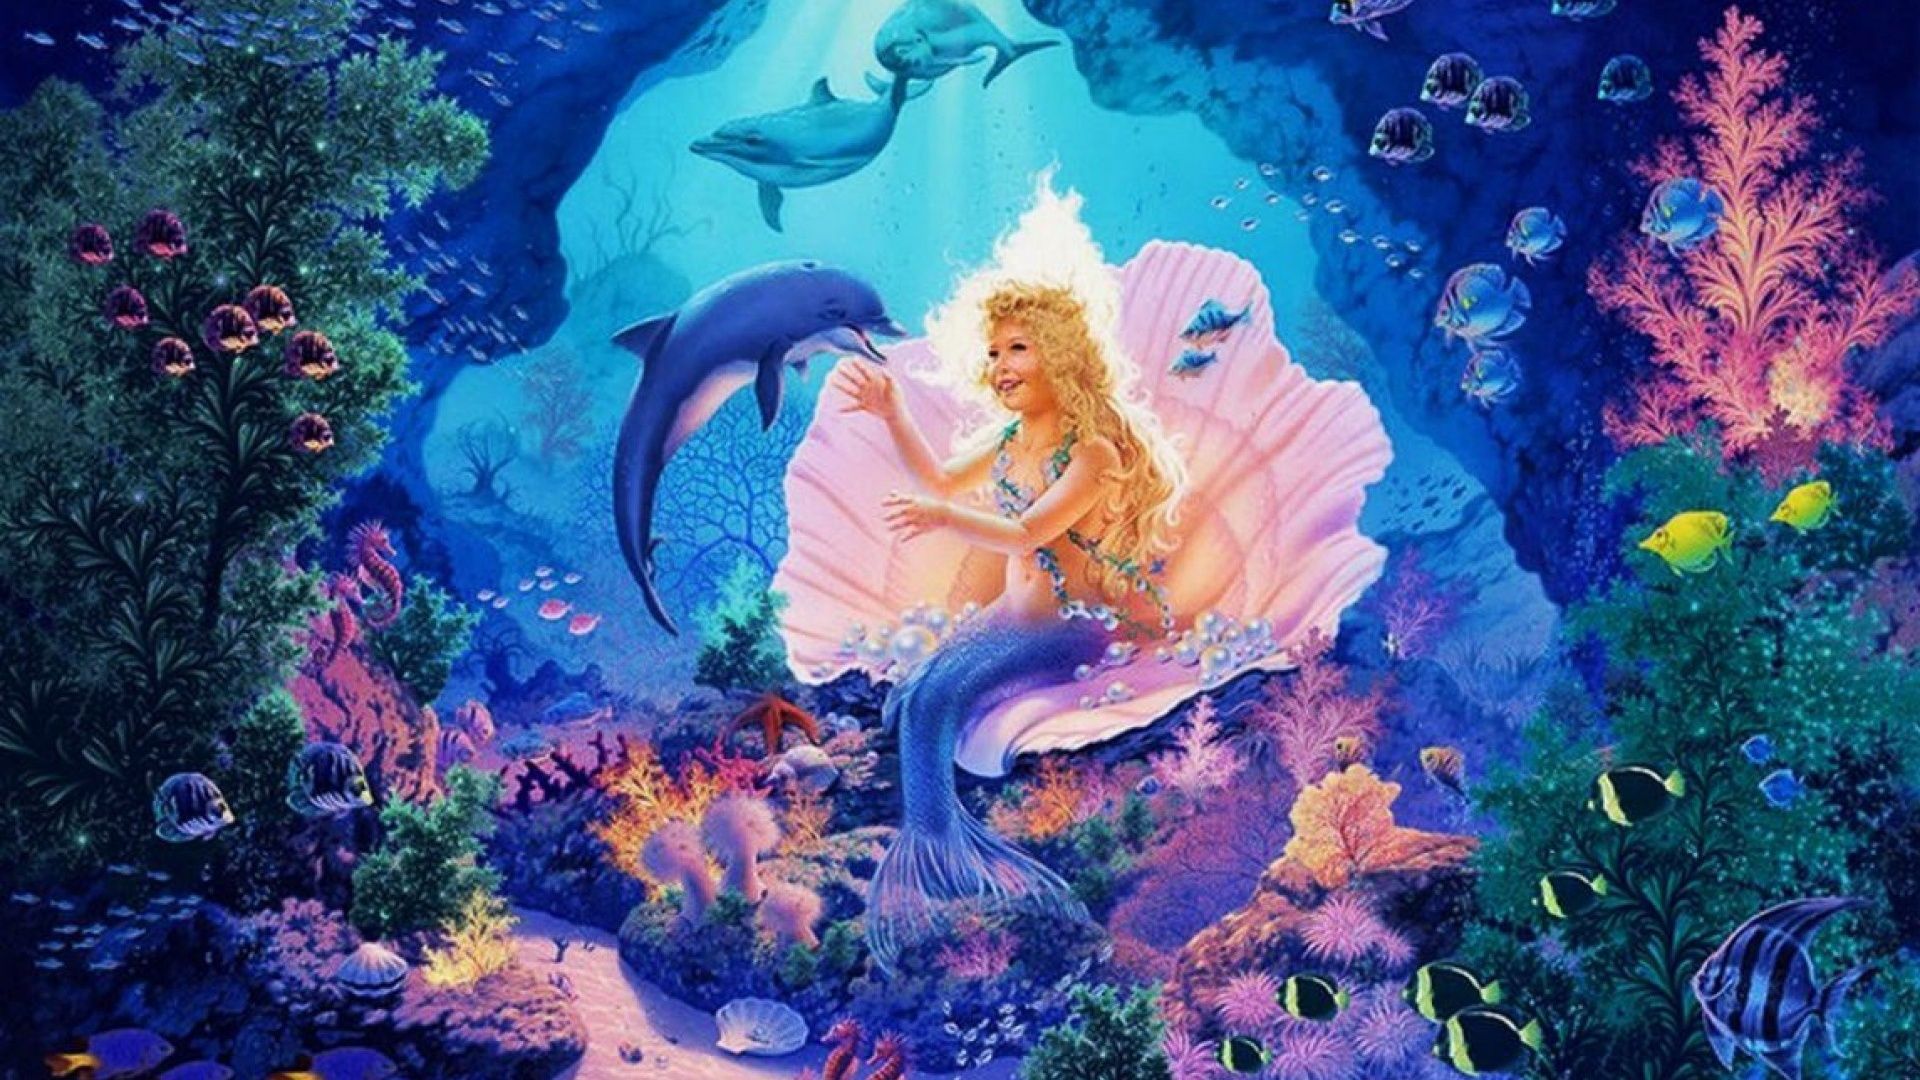 Little Mermaid Princess desktop PC and Mac wallpaper